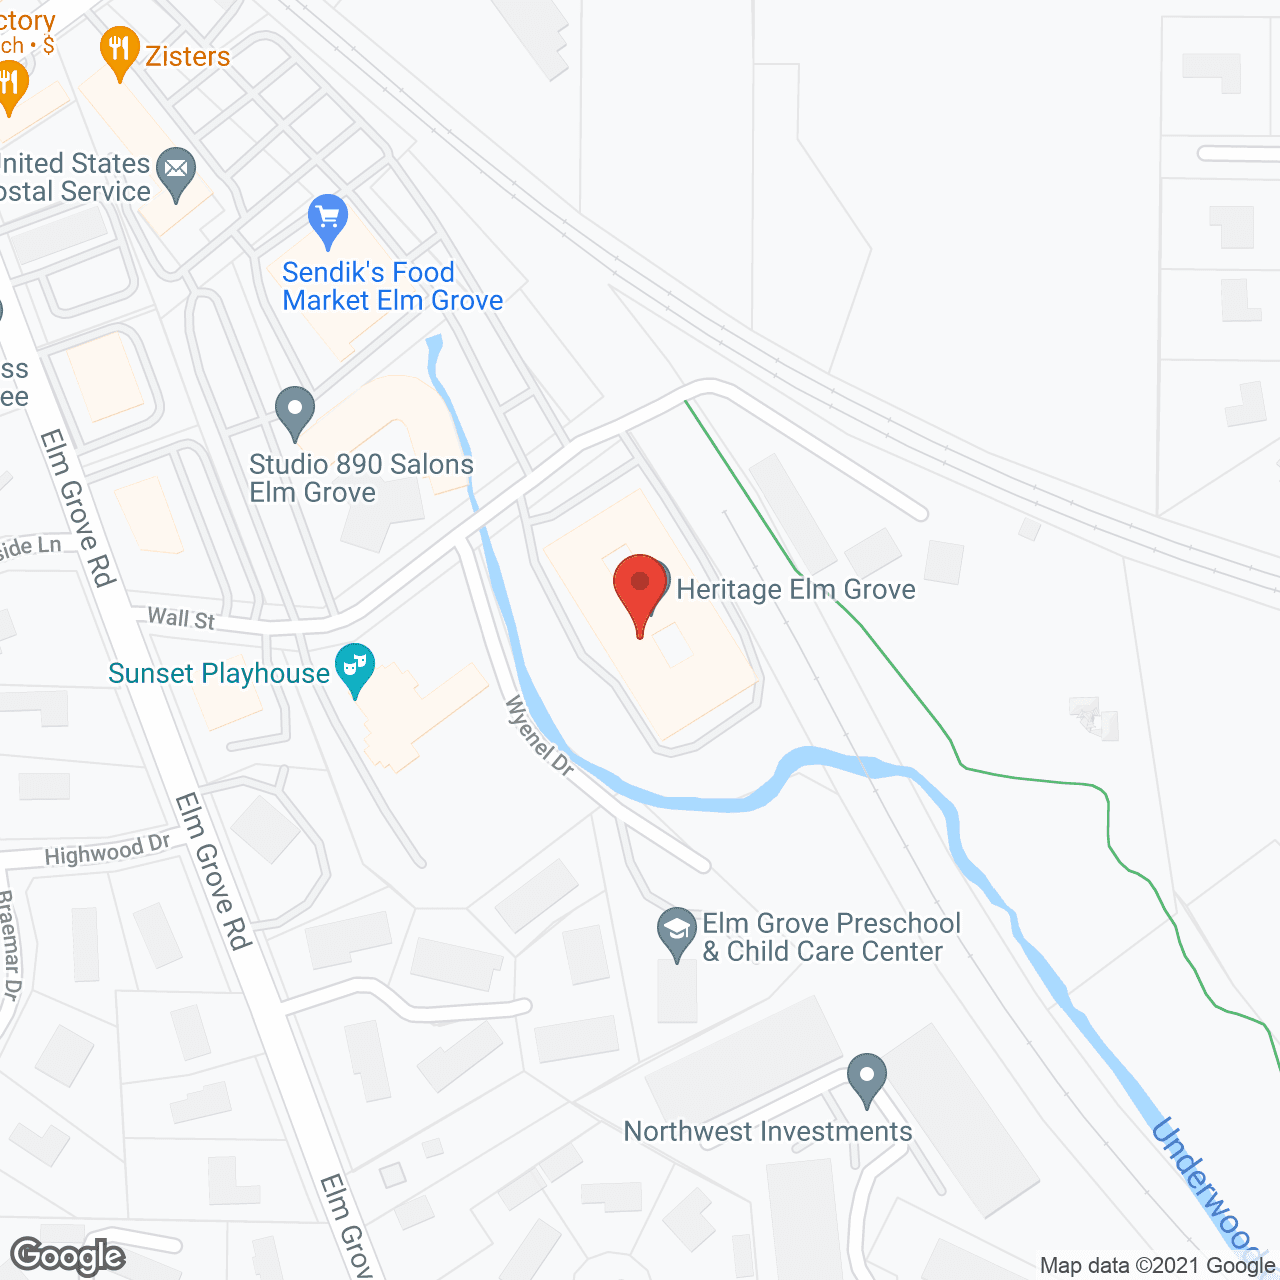 Heritage Elm Grove in google map